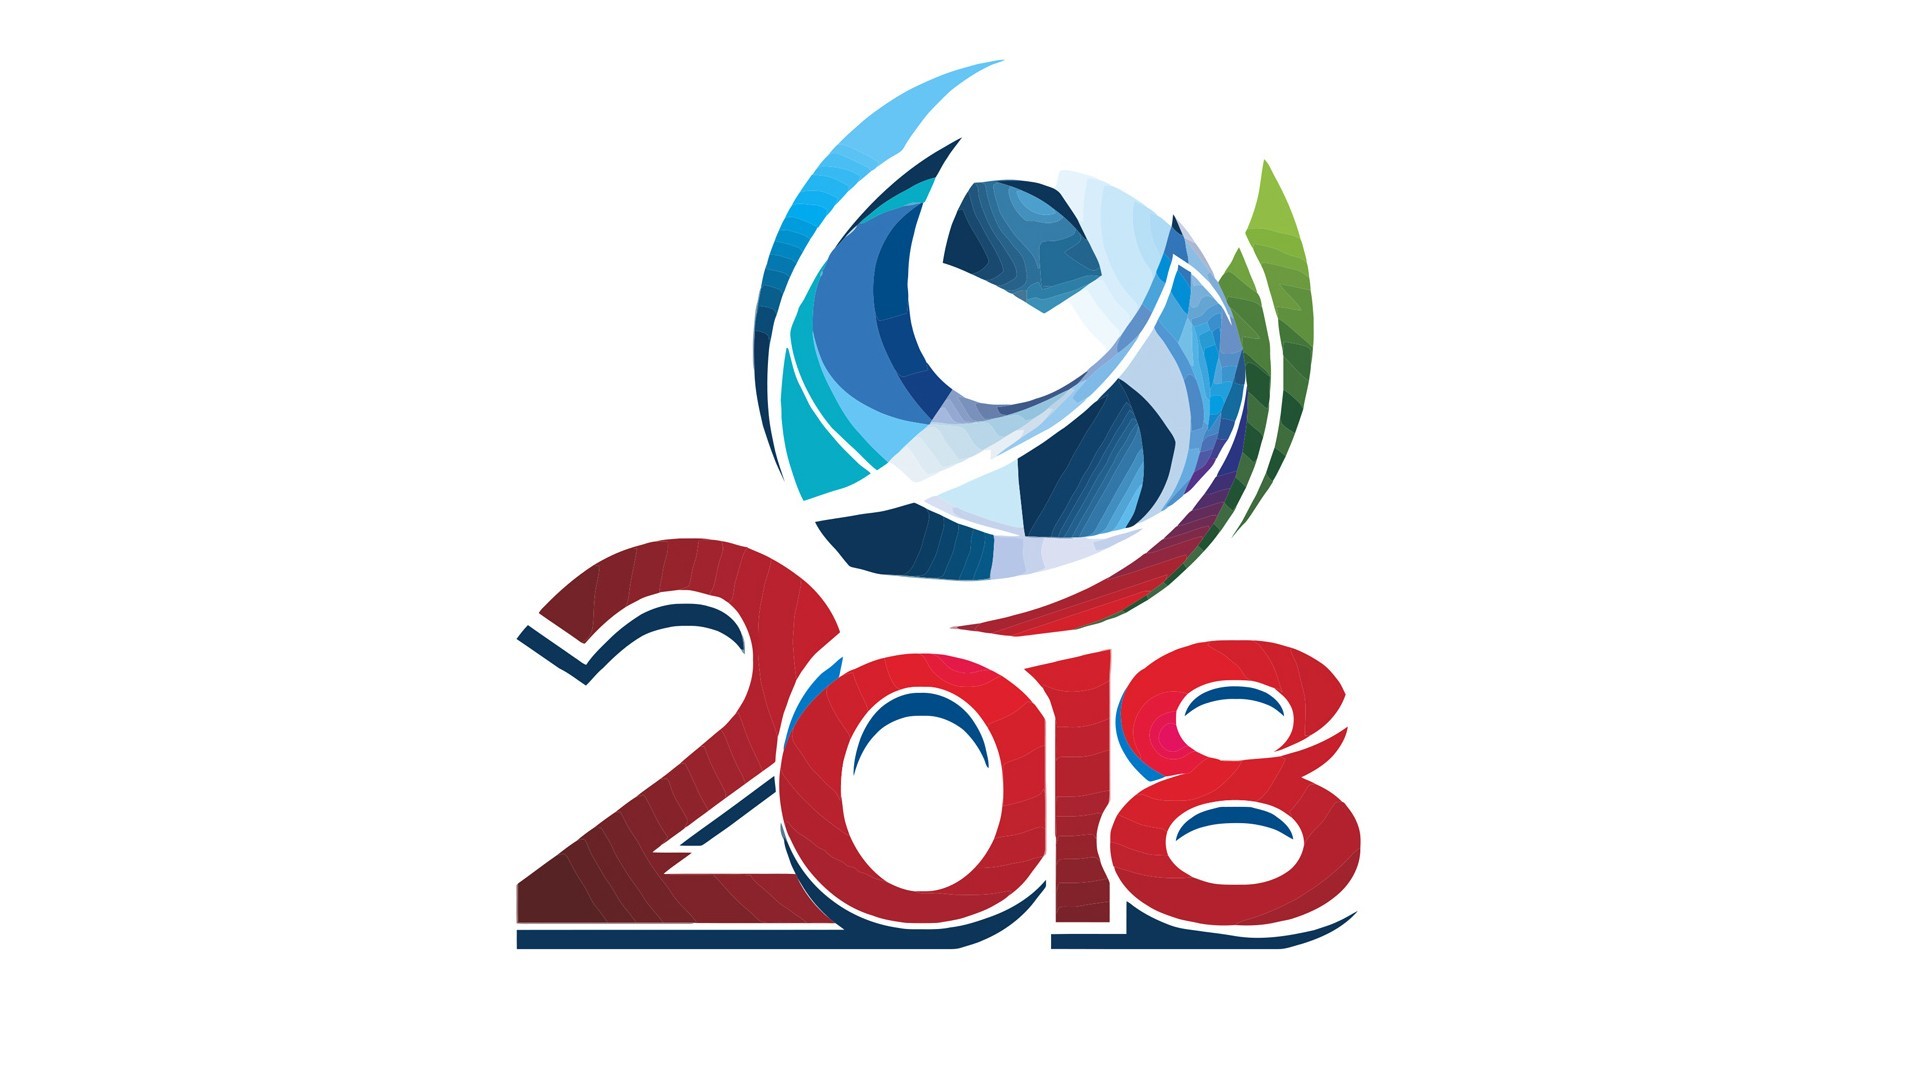 FIFA World Cup Russia 2018 003 Mistrzostwa Swiata w PiLce Noznej Rosja 2018